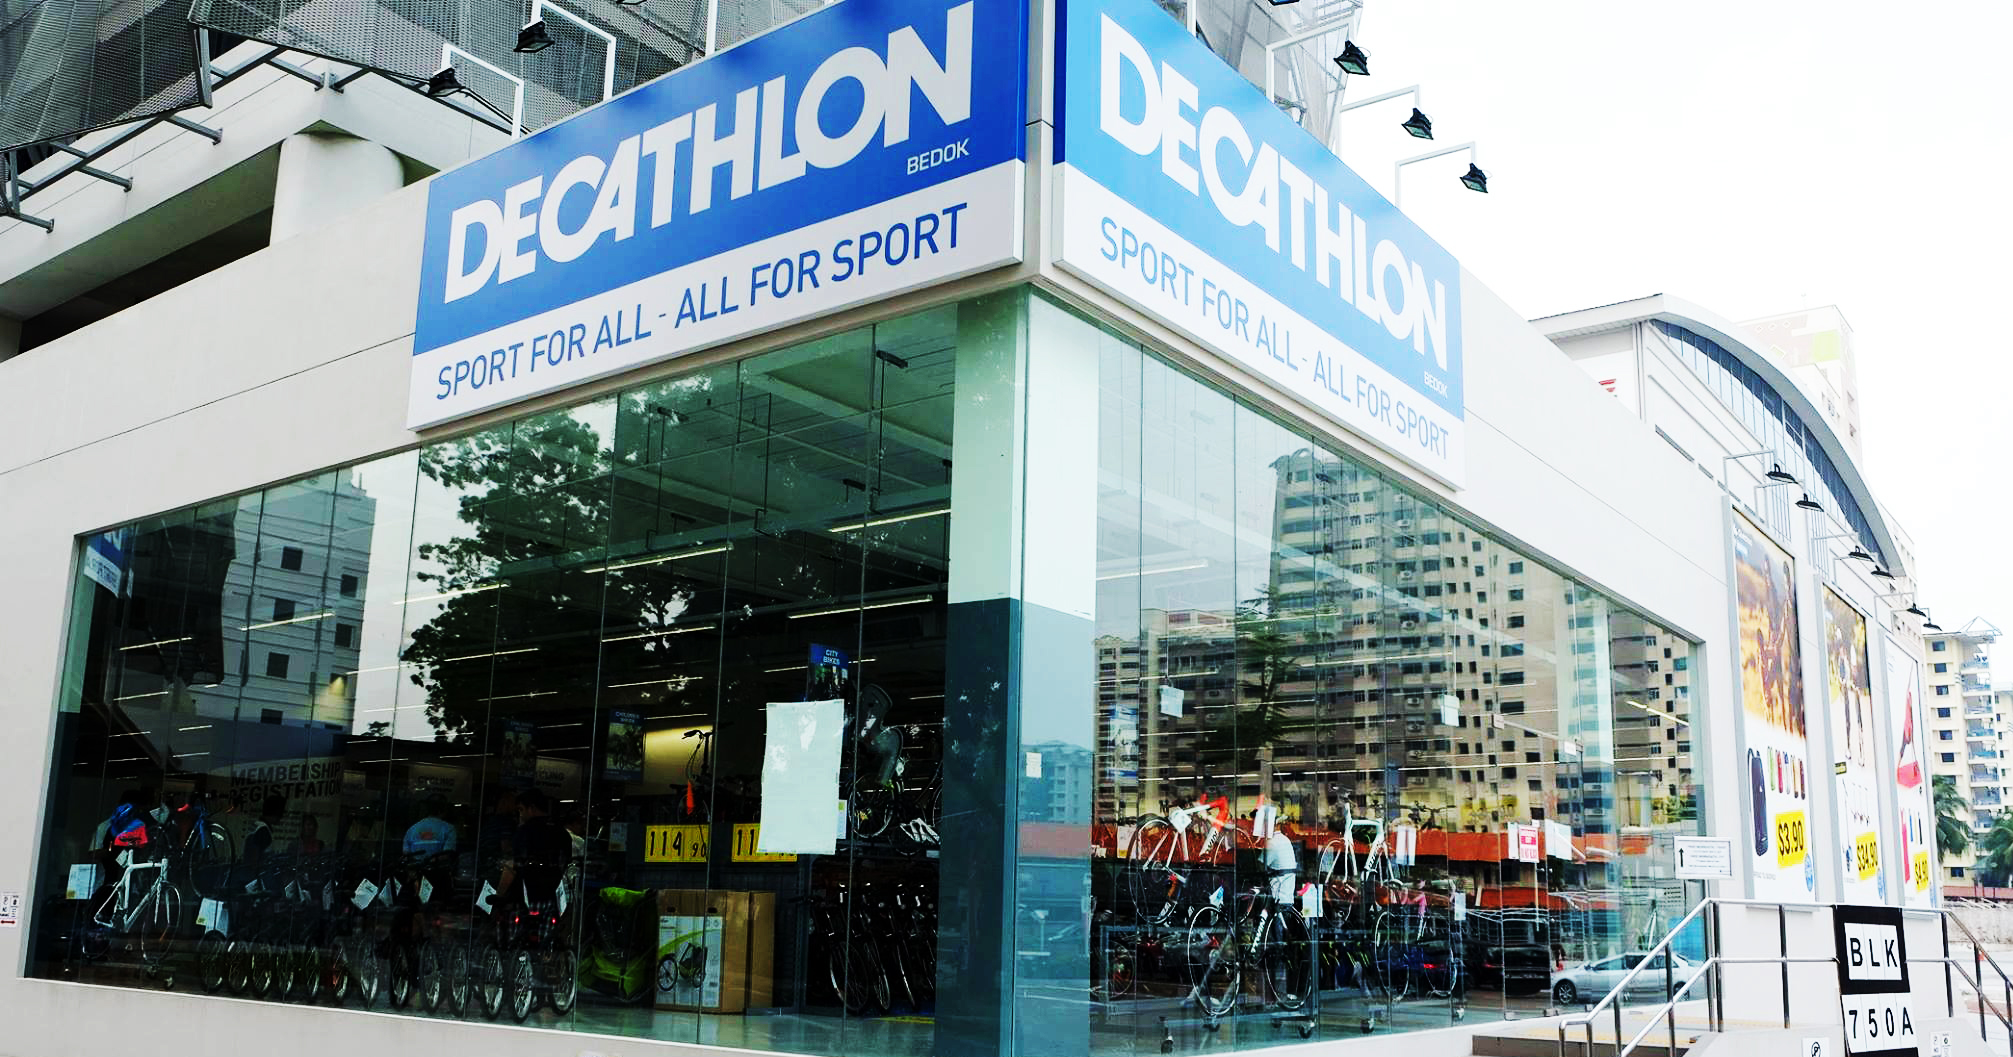 Decathlon Orchard  Decathlon Singapore